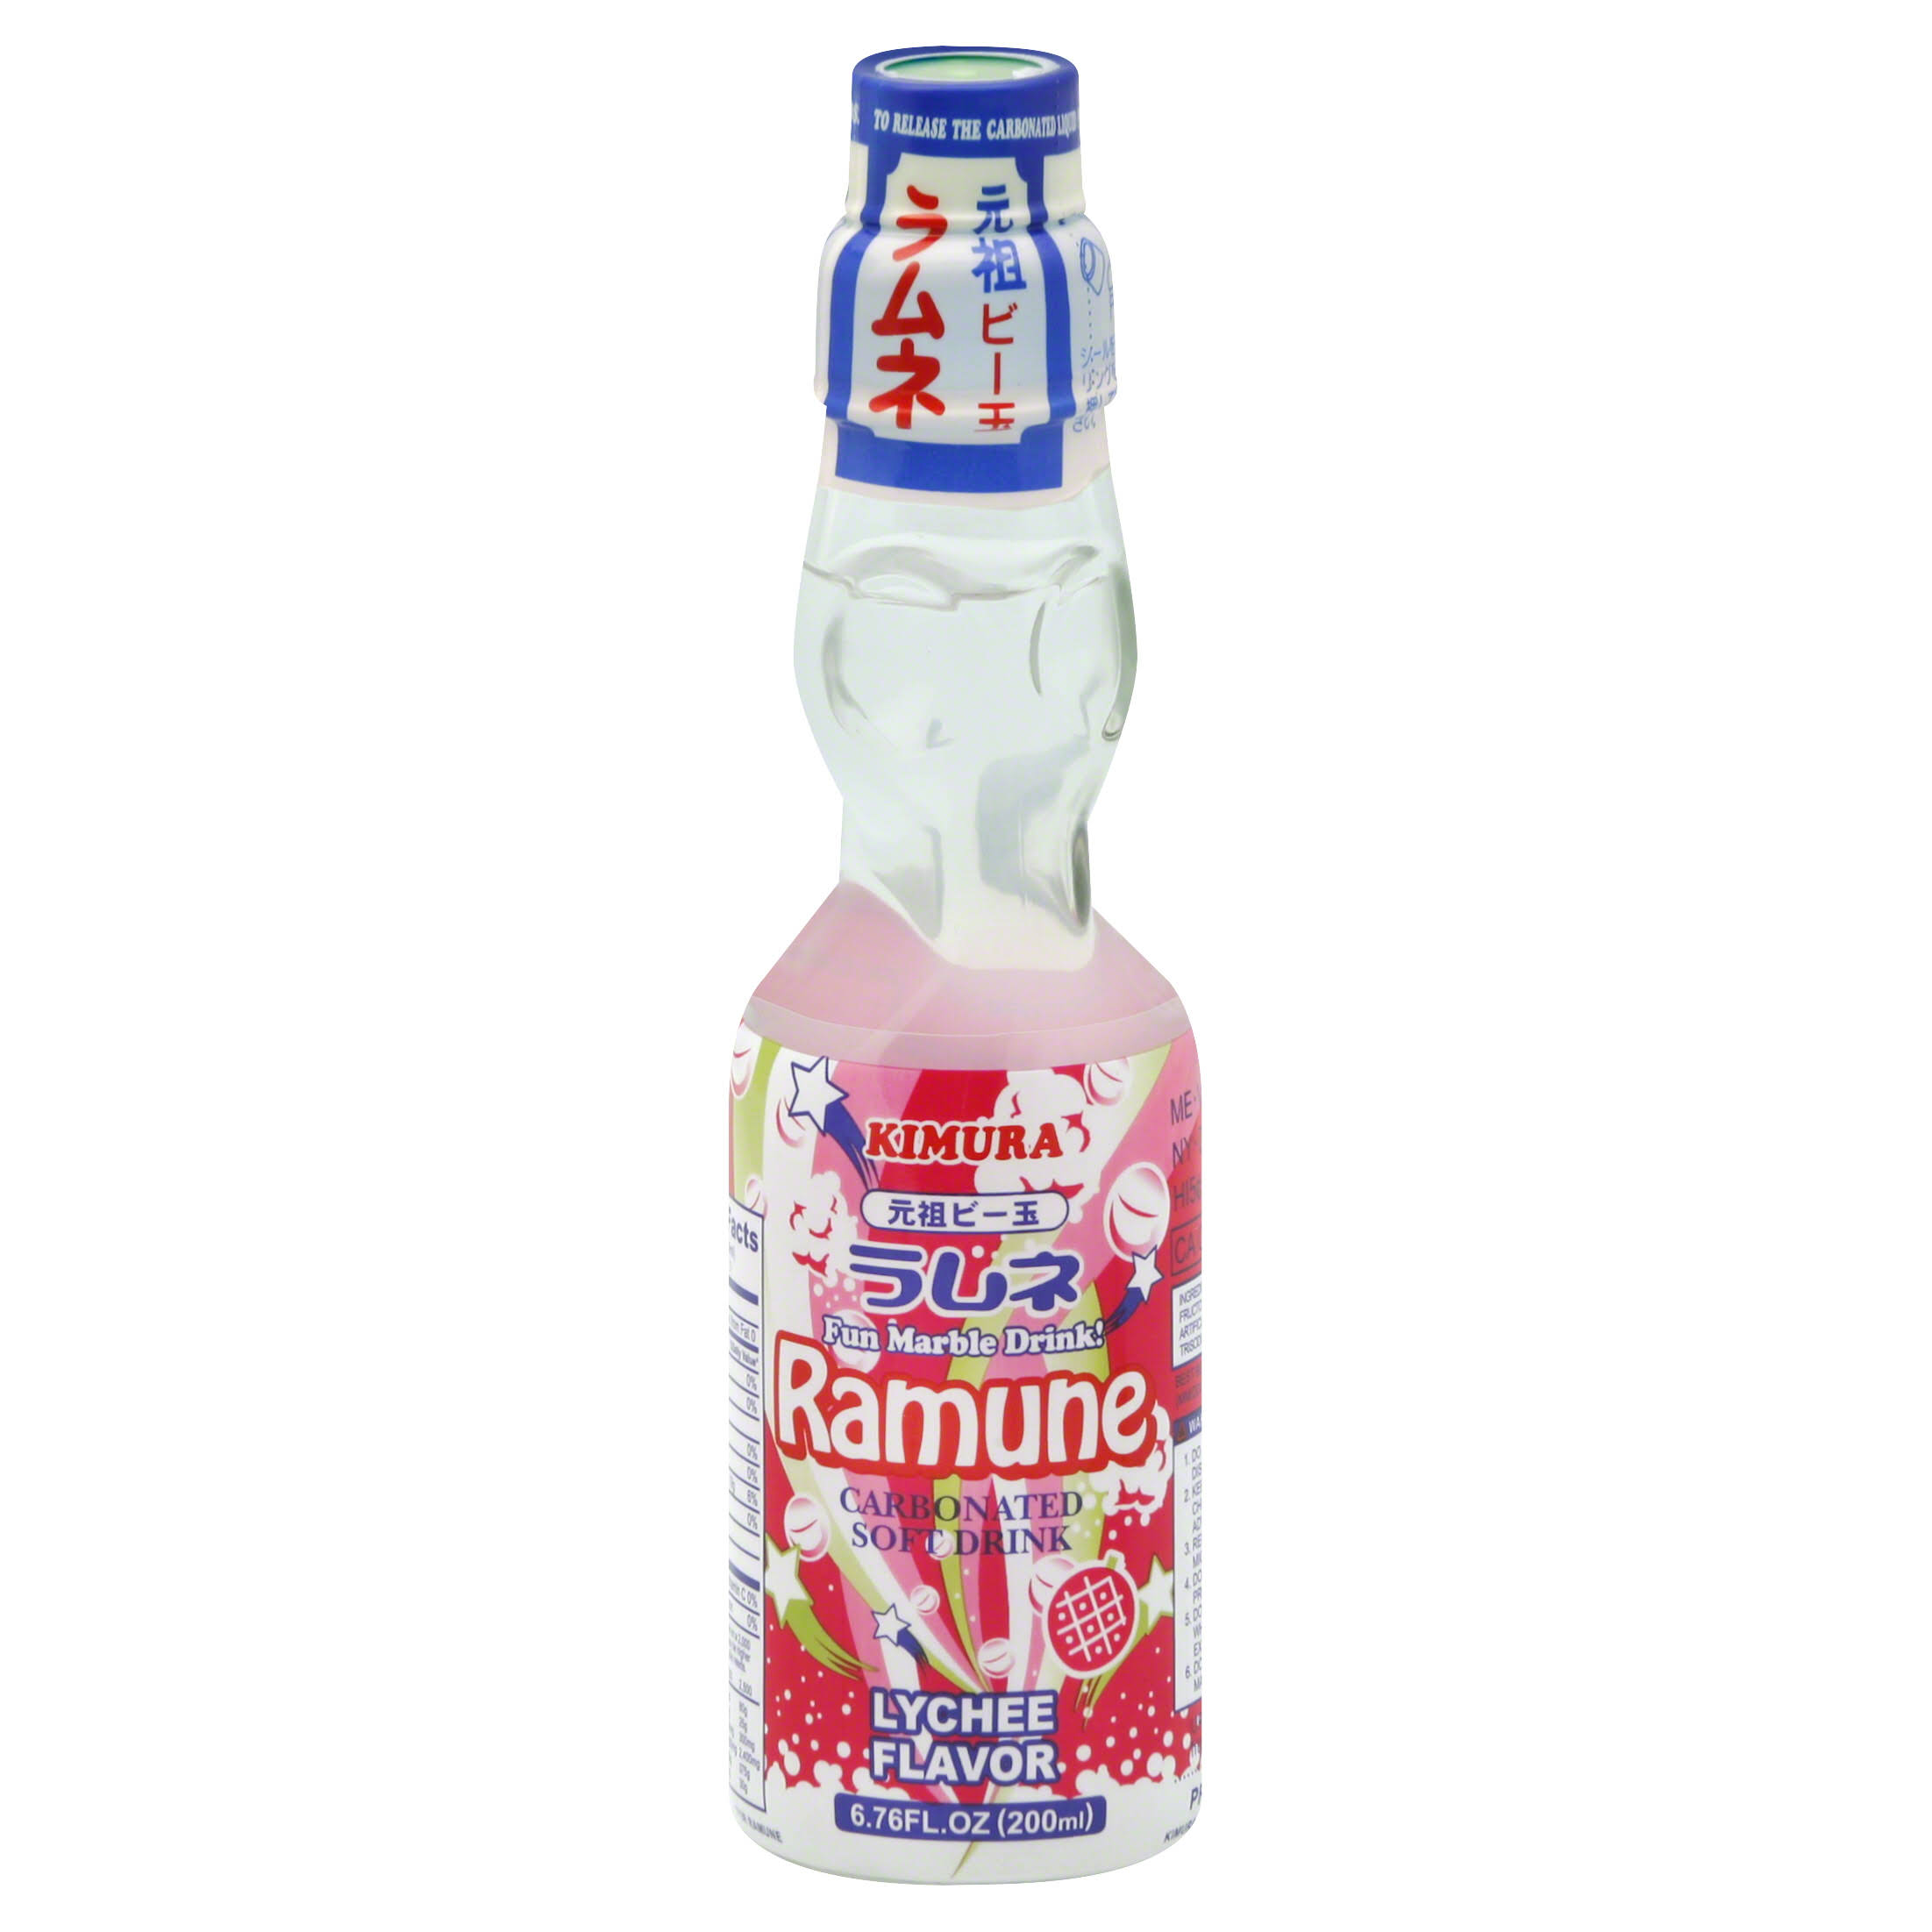 Kimura Ramune Carbonated Soft Drink - Lychee, 200ml